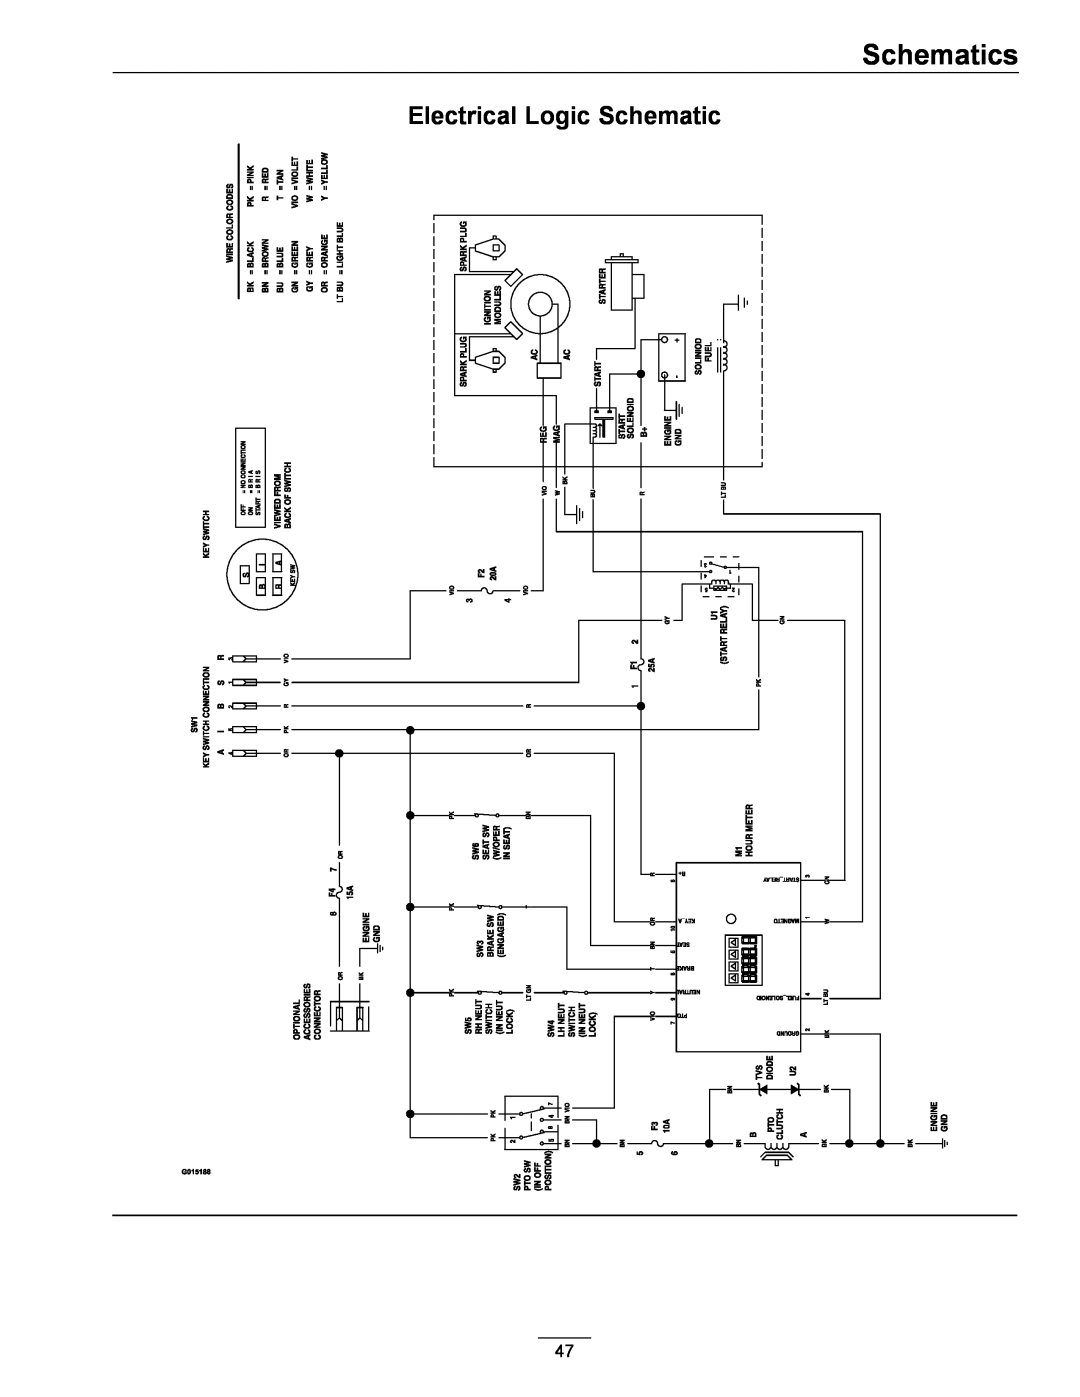 Exmark 000 & higher, 312 manual Electrical Logic Schematic, Schematics 